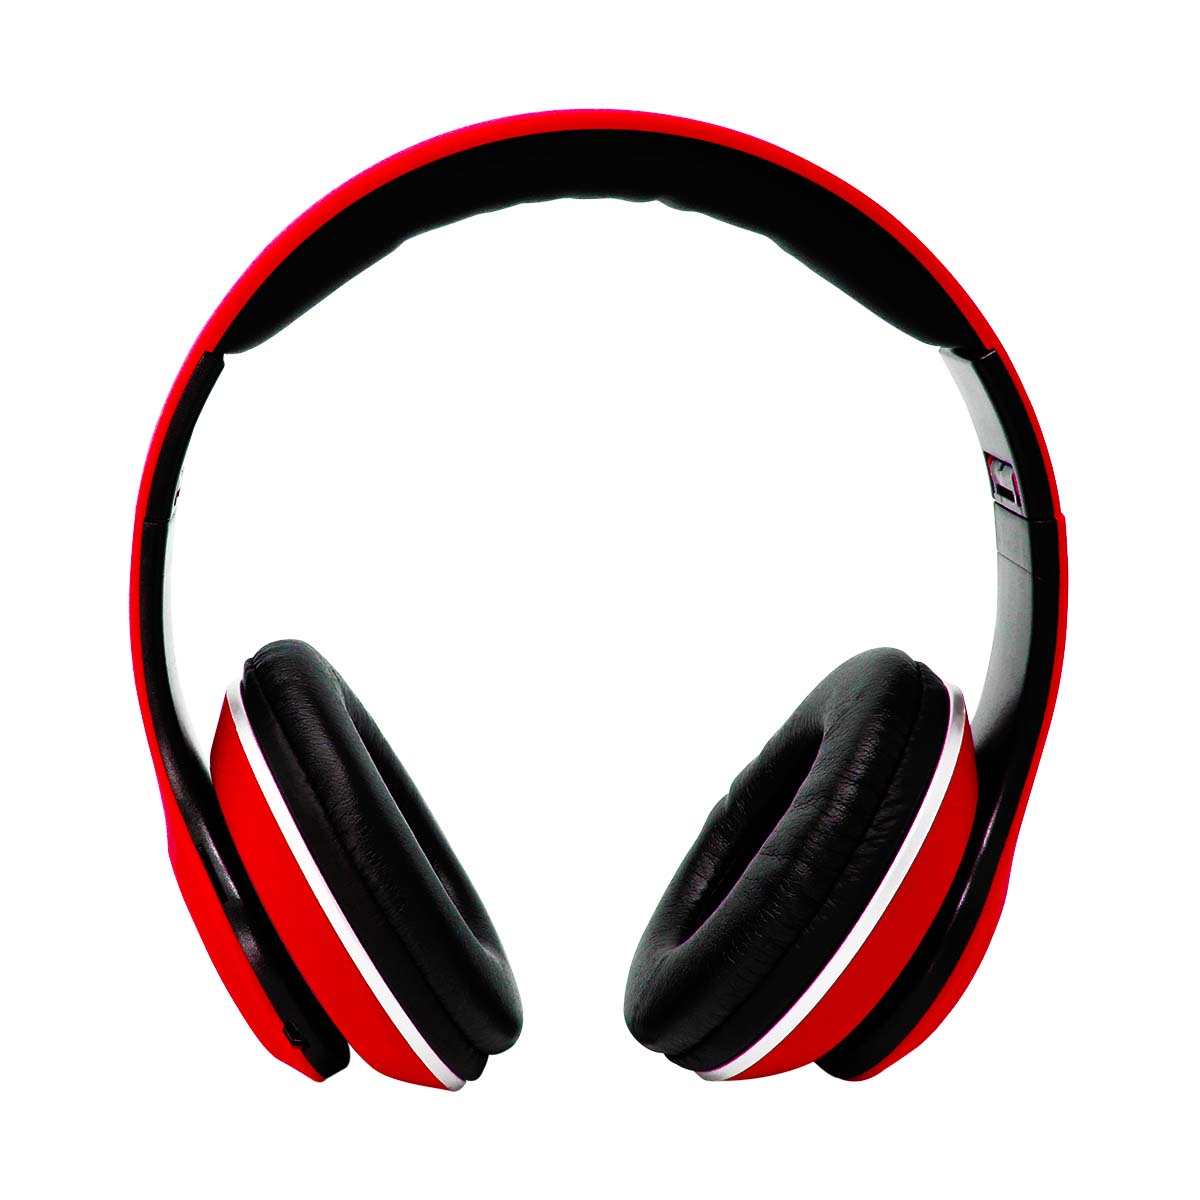 AUDIFONOS OVER-EAR BLUETOOTH NBH-01 SONIDO HI-FI 3.5MM RADIO FM MICRO SD 3.5MML MANOS LIBRES RUBBERIZED ROJO -